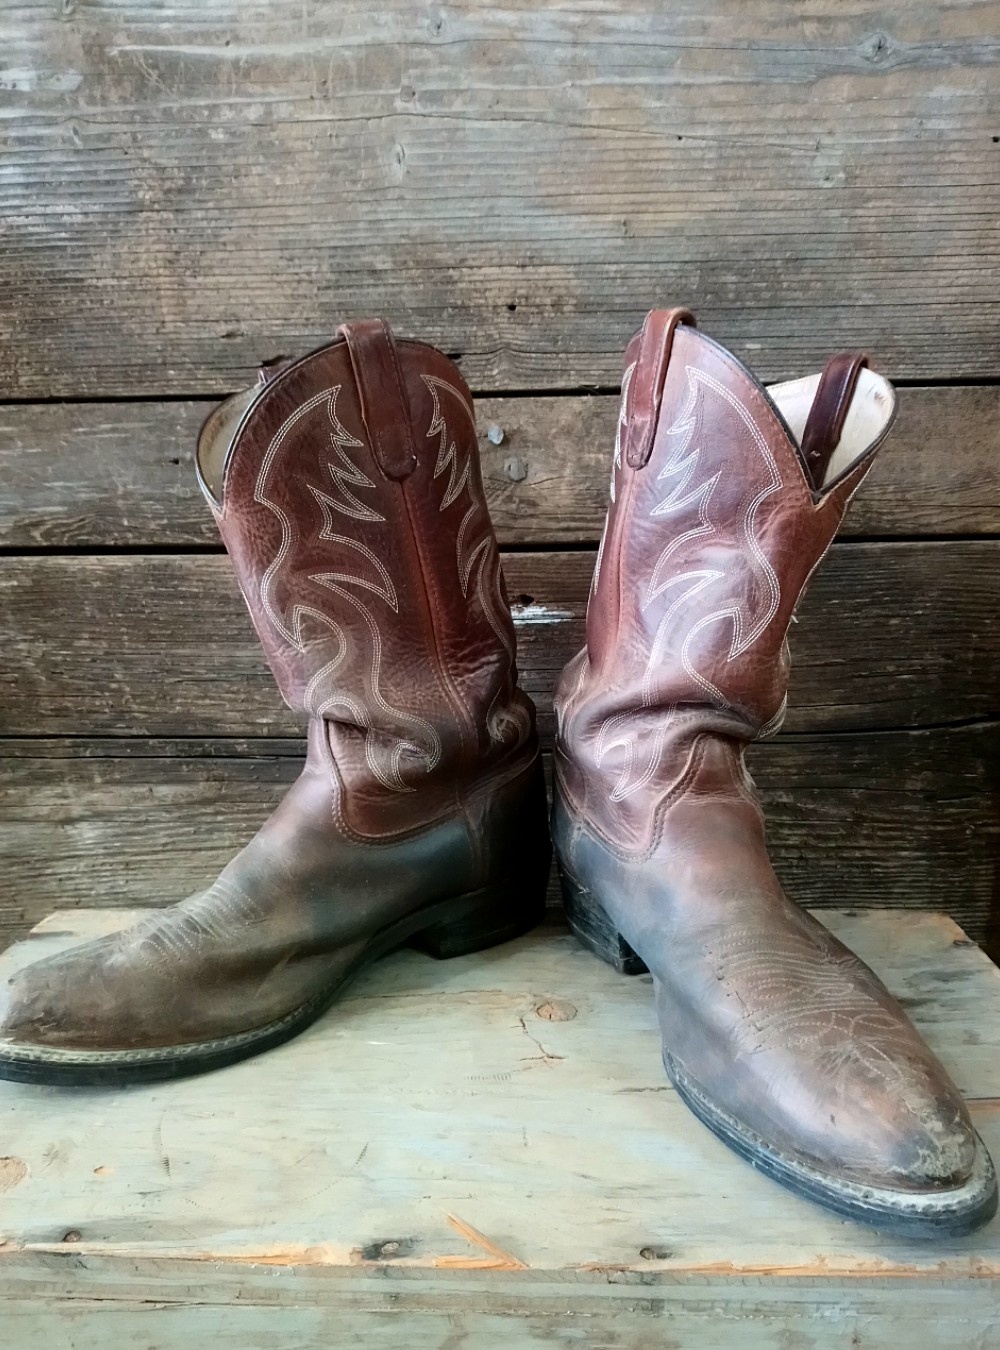 western work boots